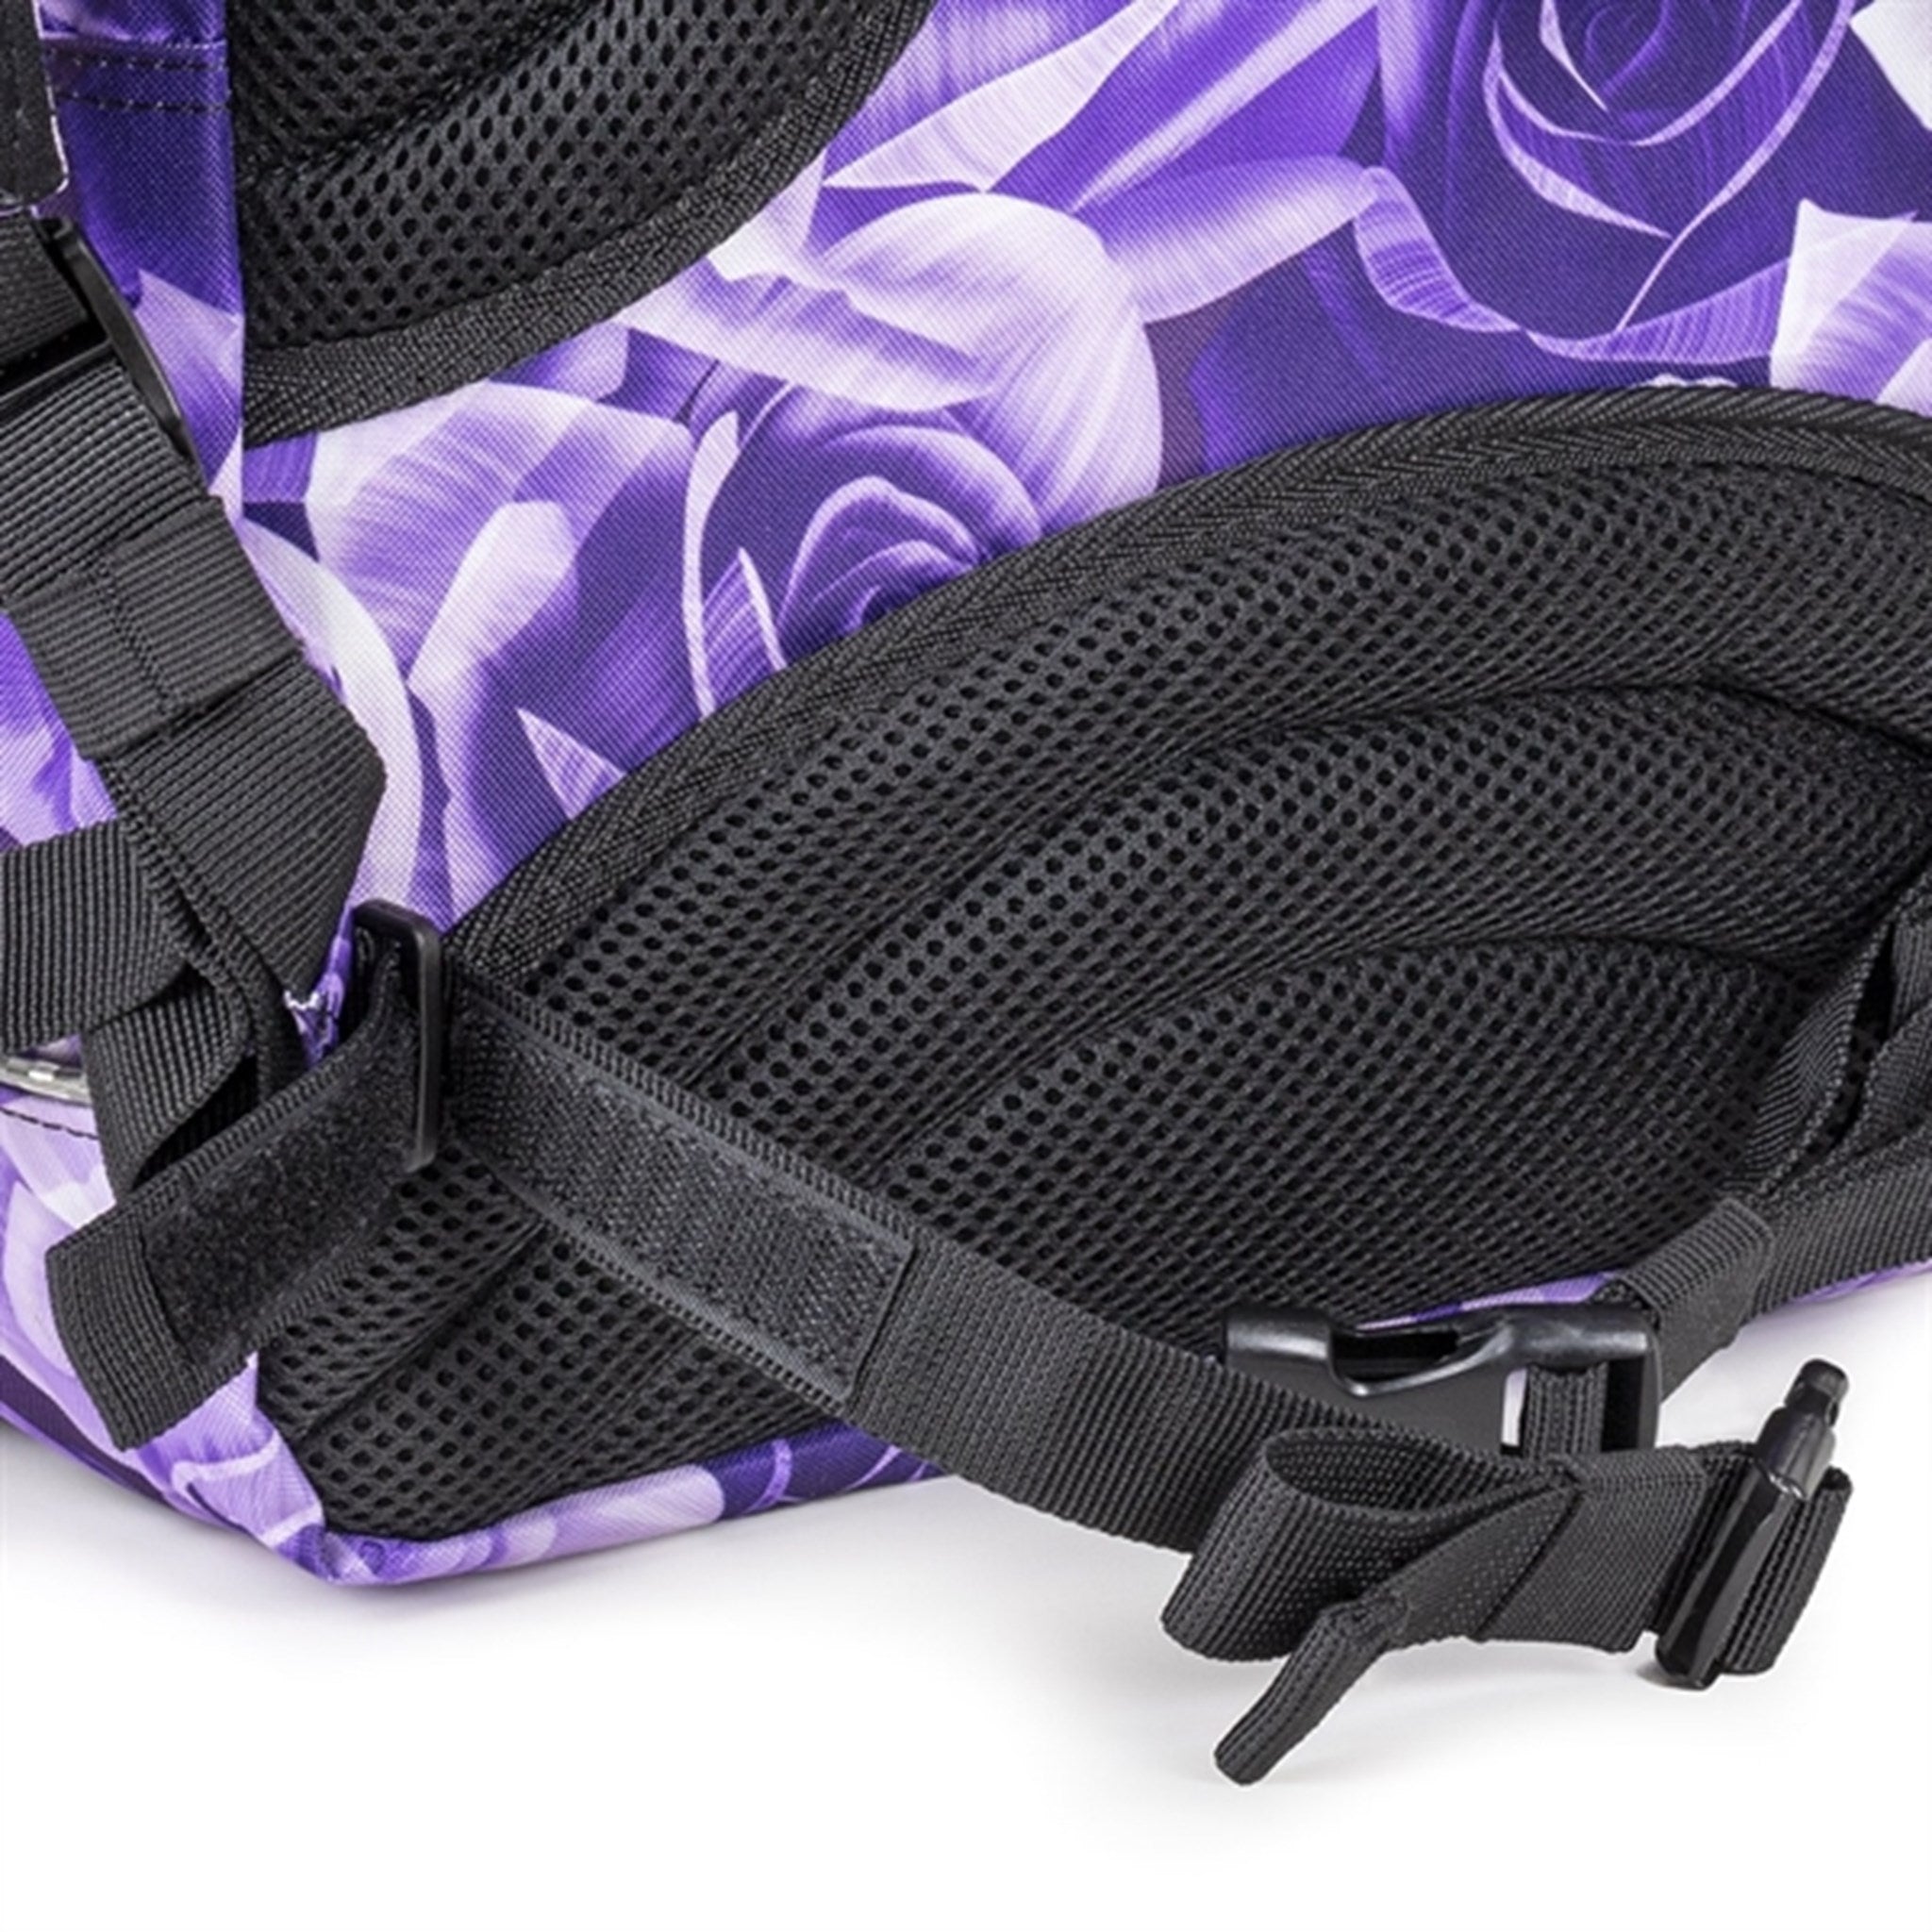 JEVA Backpack Purple Rose 4